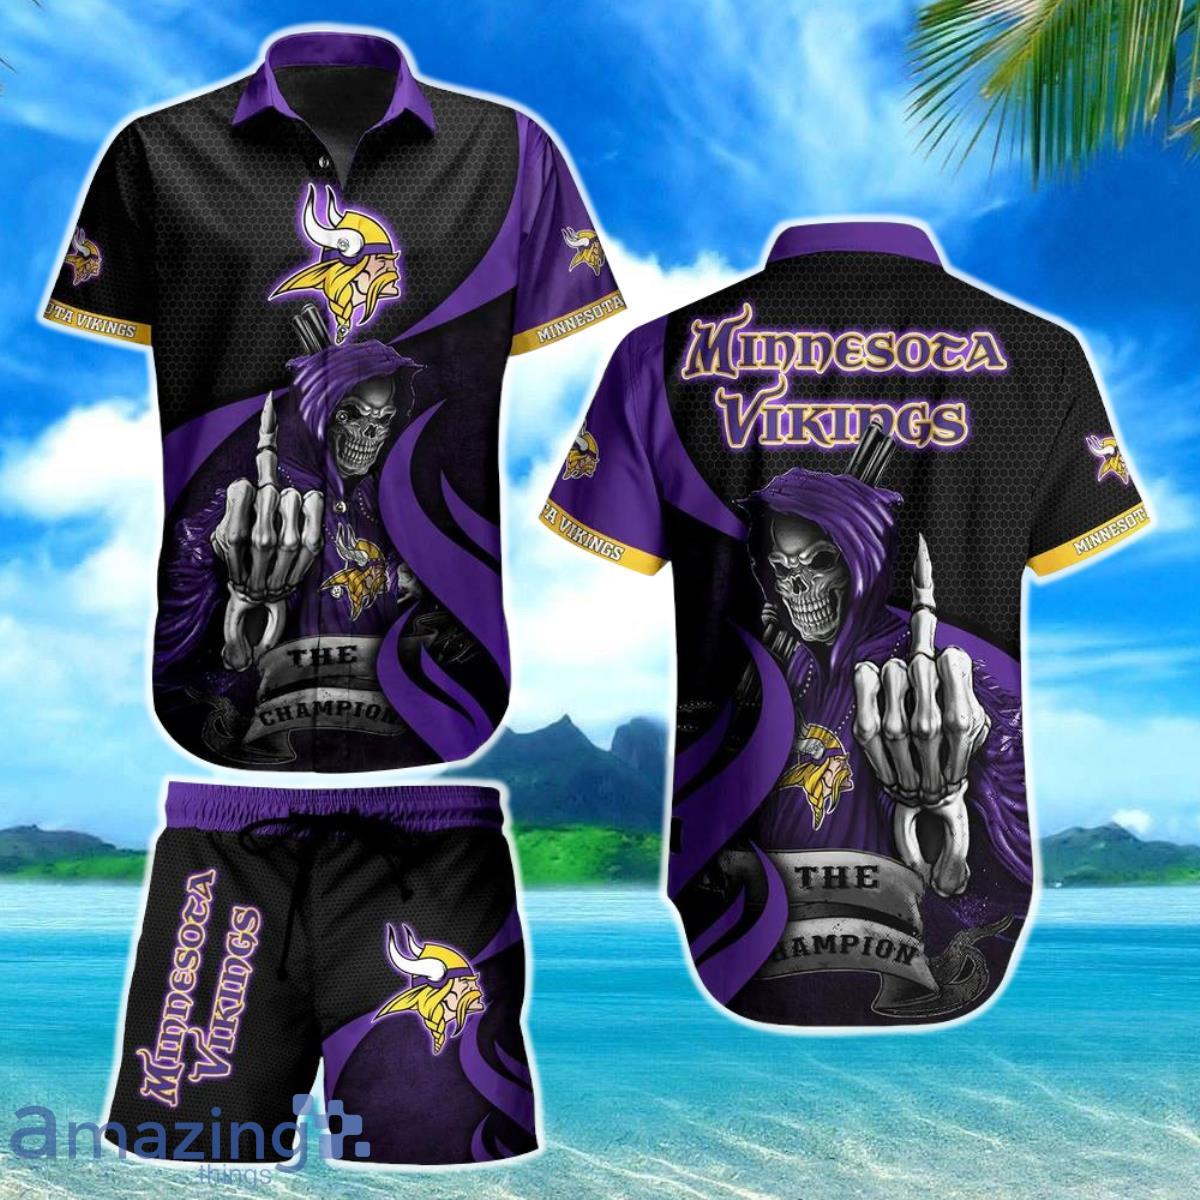 Minnesota Vikings NFL Football Hawaiian Shirt And Short Graphic Summer The Champion Gift For Men Women Product Photo 1